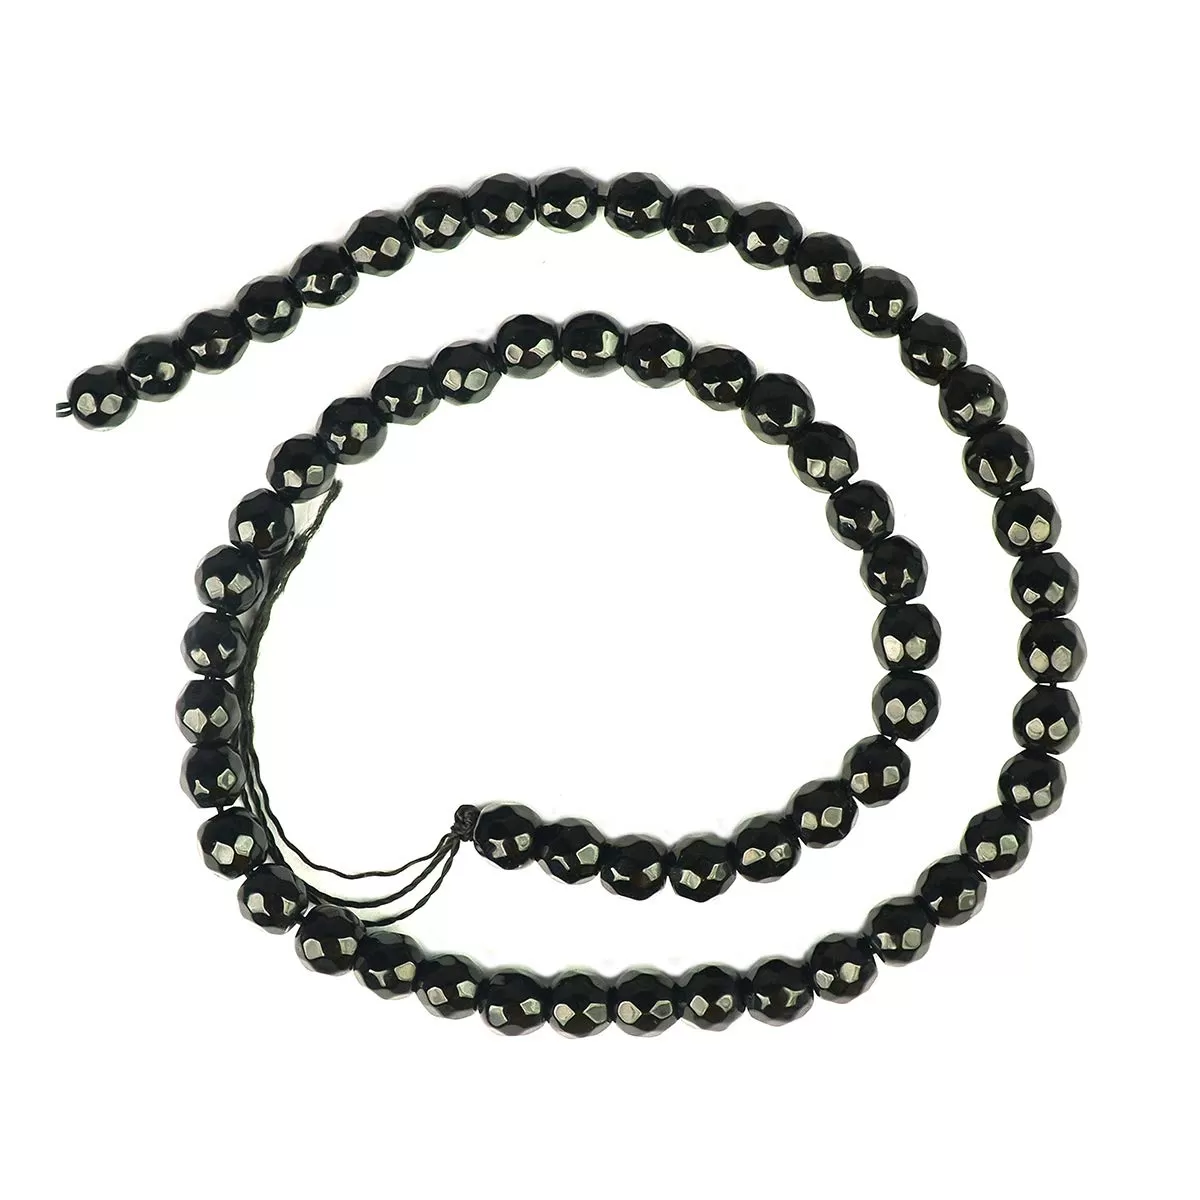 Black Tourmaline Loose Beads Diamond Cut 6 mm Stone Beads for Jewellery Making Bracelet Beads Mala Beads Crystal Beads for Jewellery Making Necklace/Bracelet/Mala